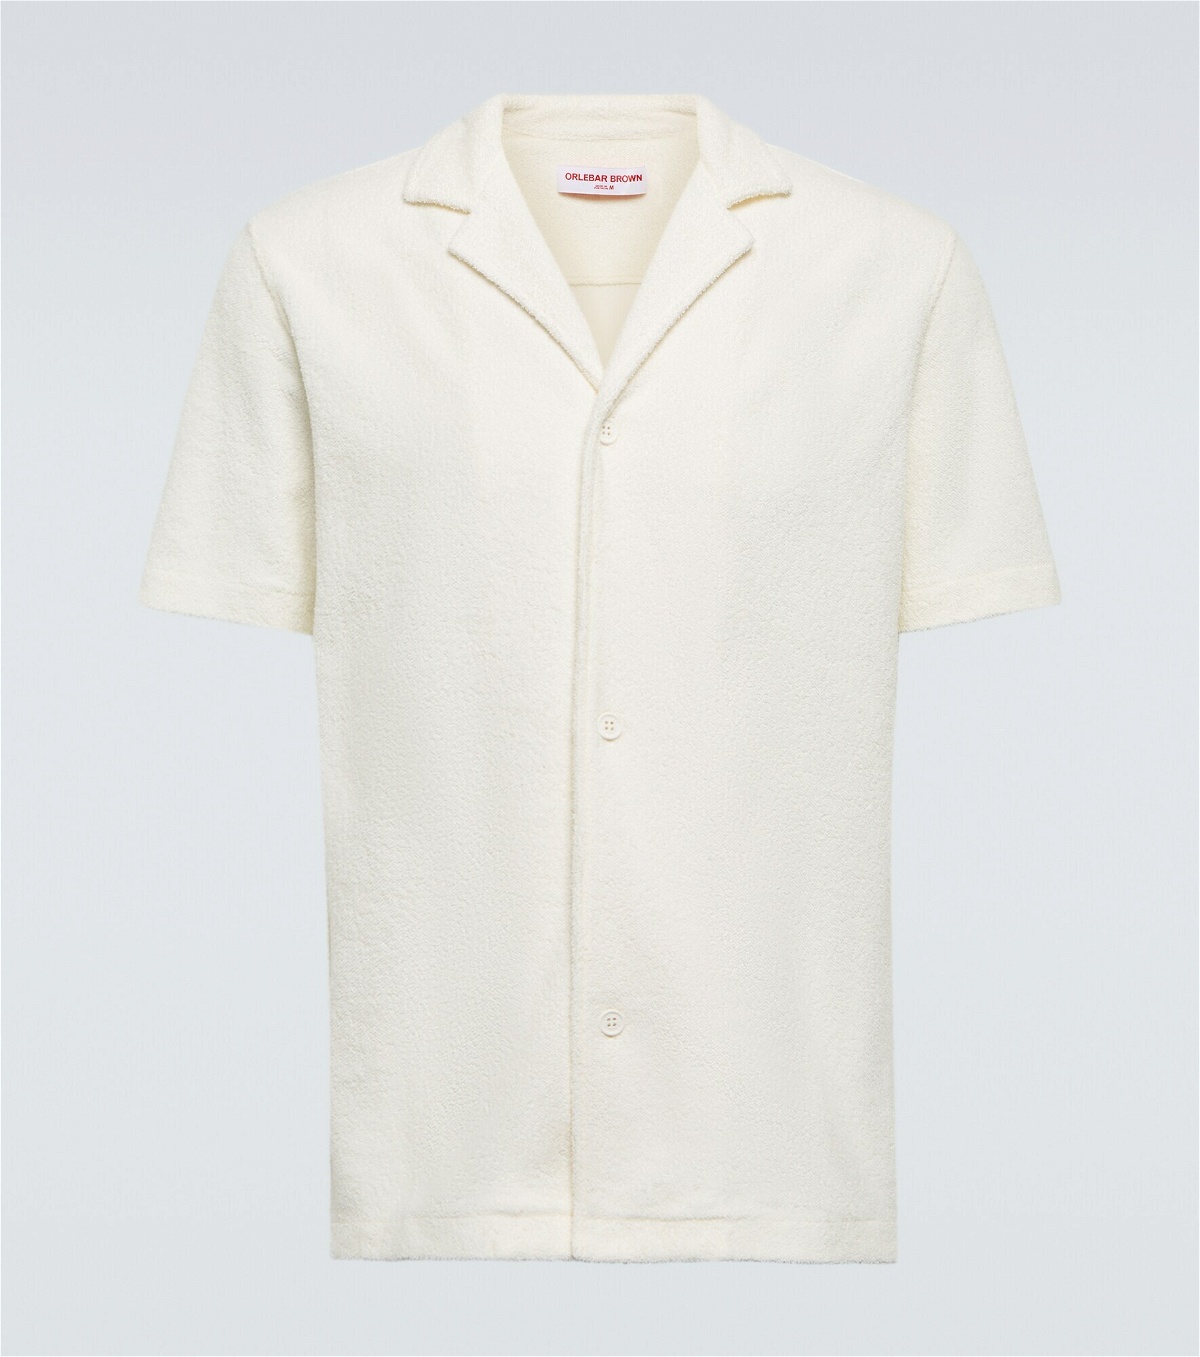 Orlebar Brown - Howell terry cotton shirt Orlebar Brown